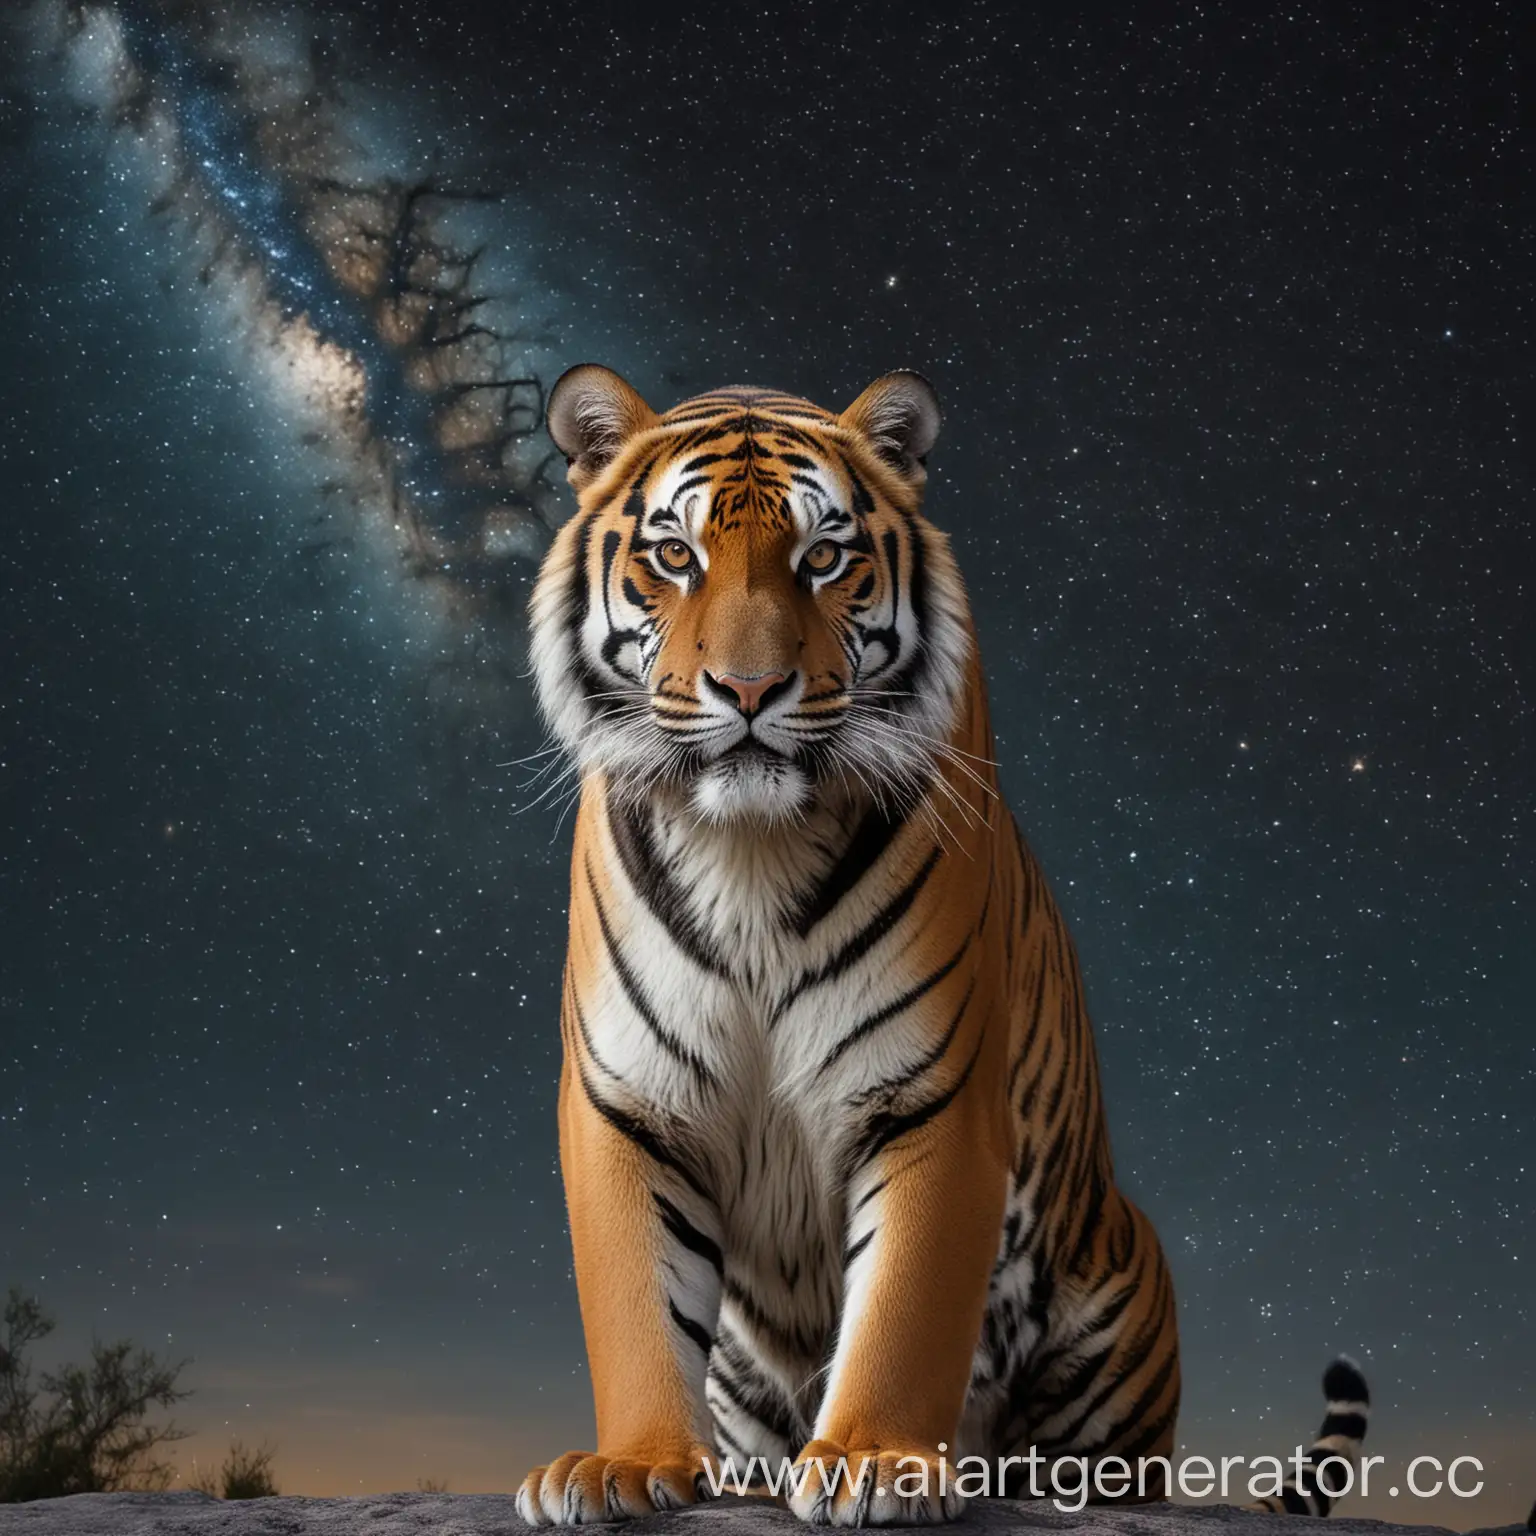 Tiger-Roaming-Under-a-Starry-Sky